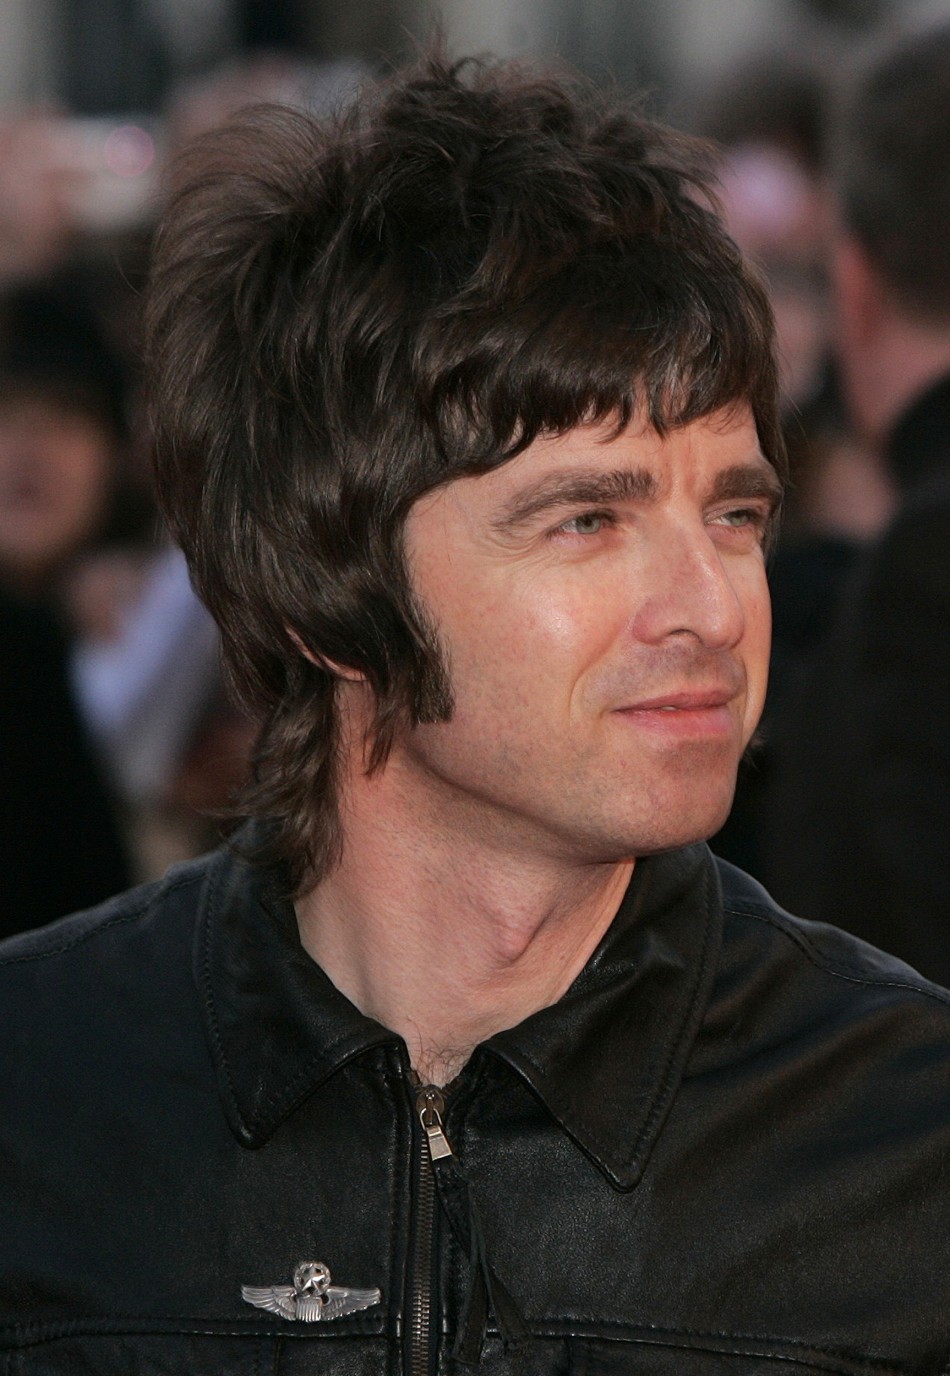 Top 10 British Singers in Class of 2011 - Noel Gallagher